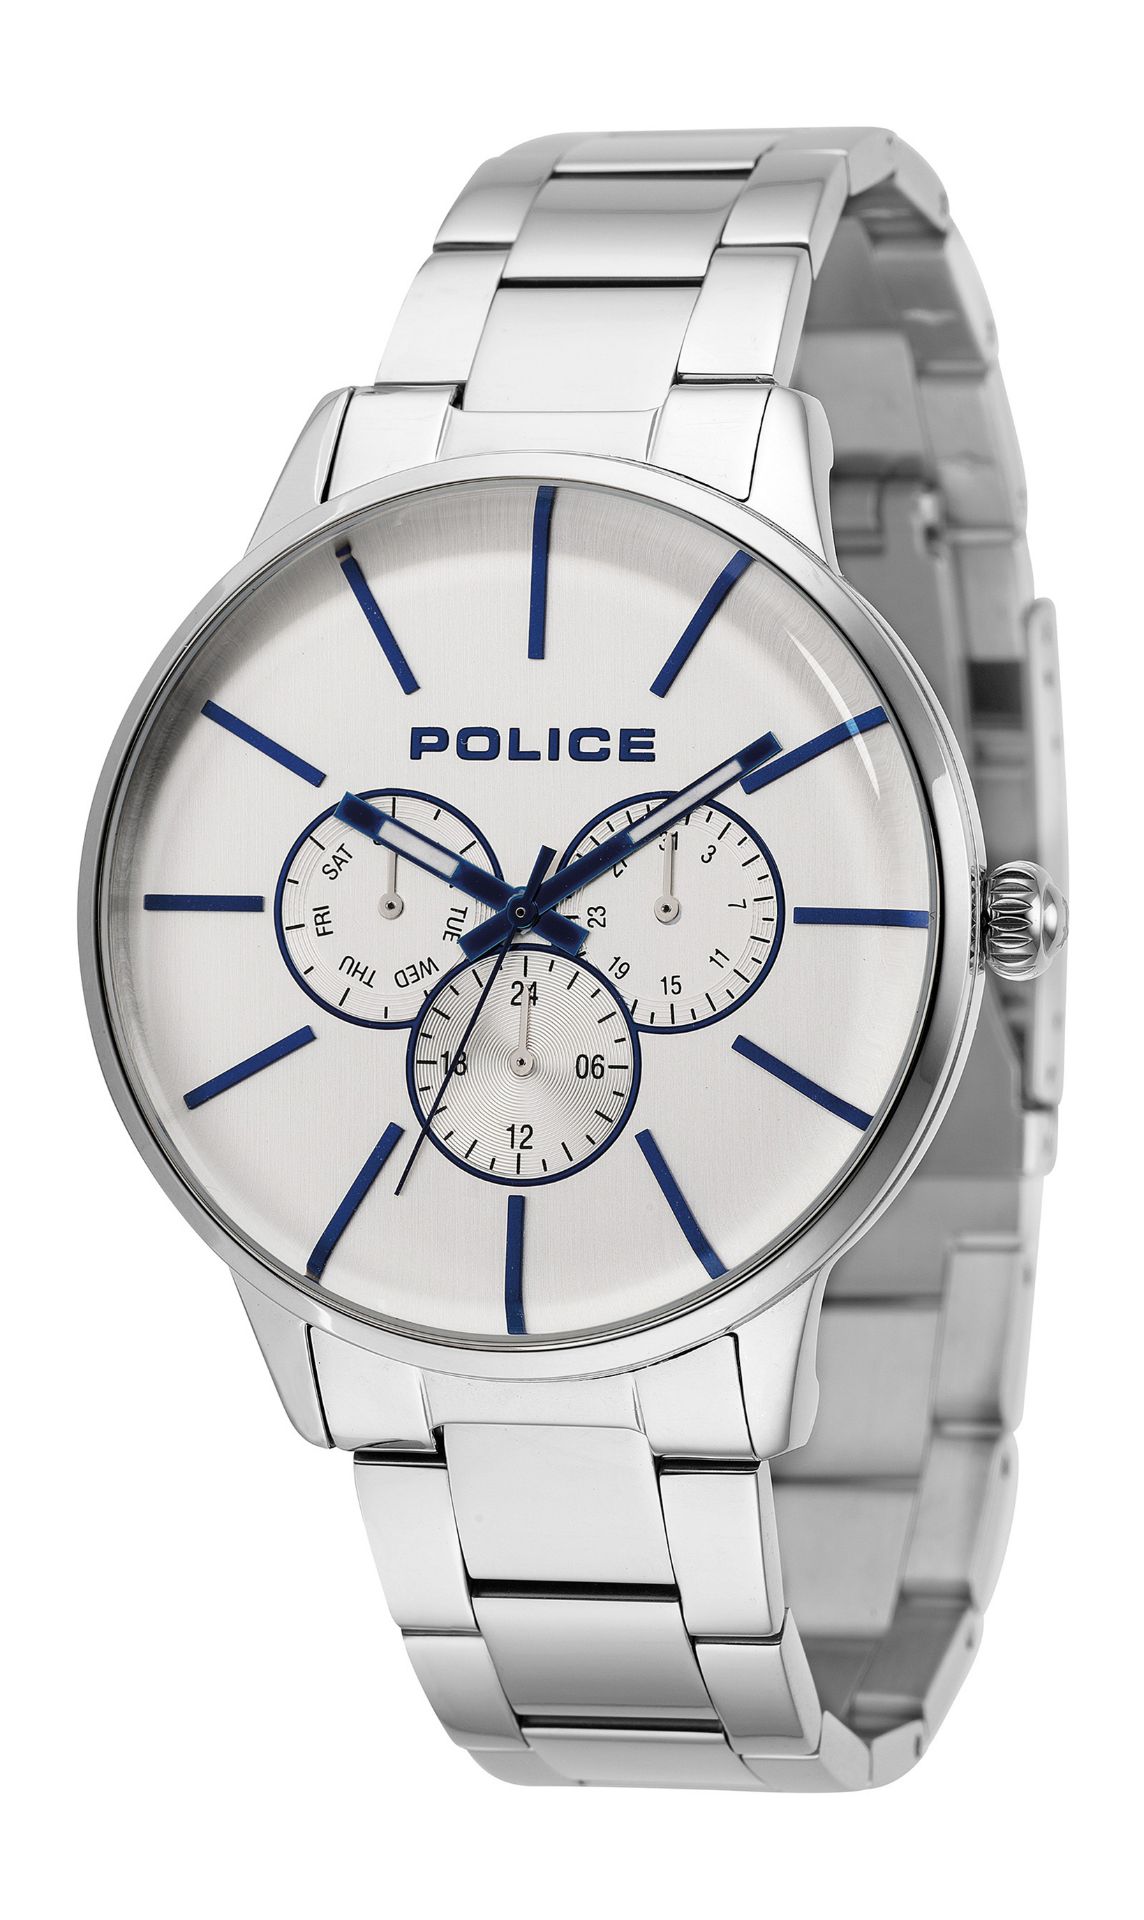 Police Men's Quartz Watch - Image 4 of 4